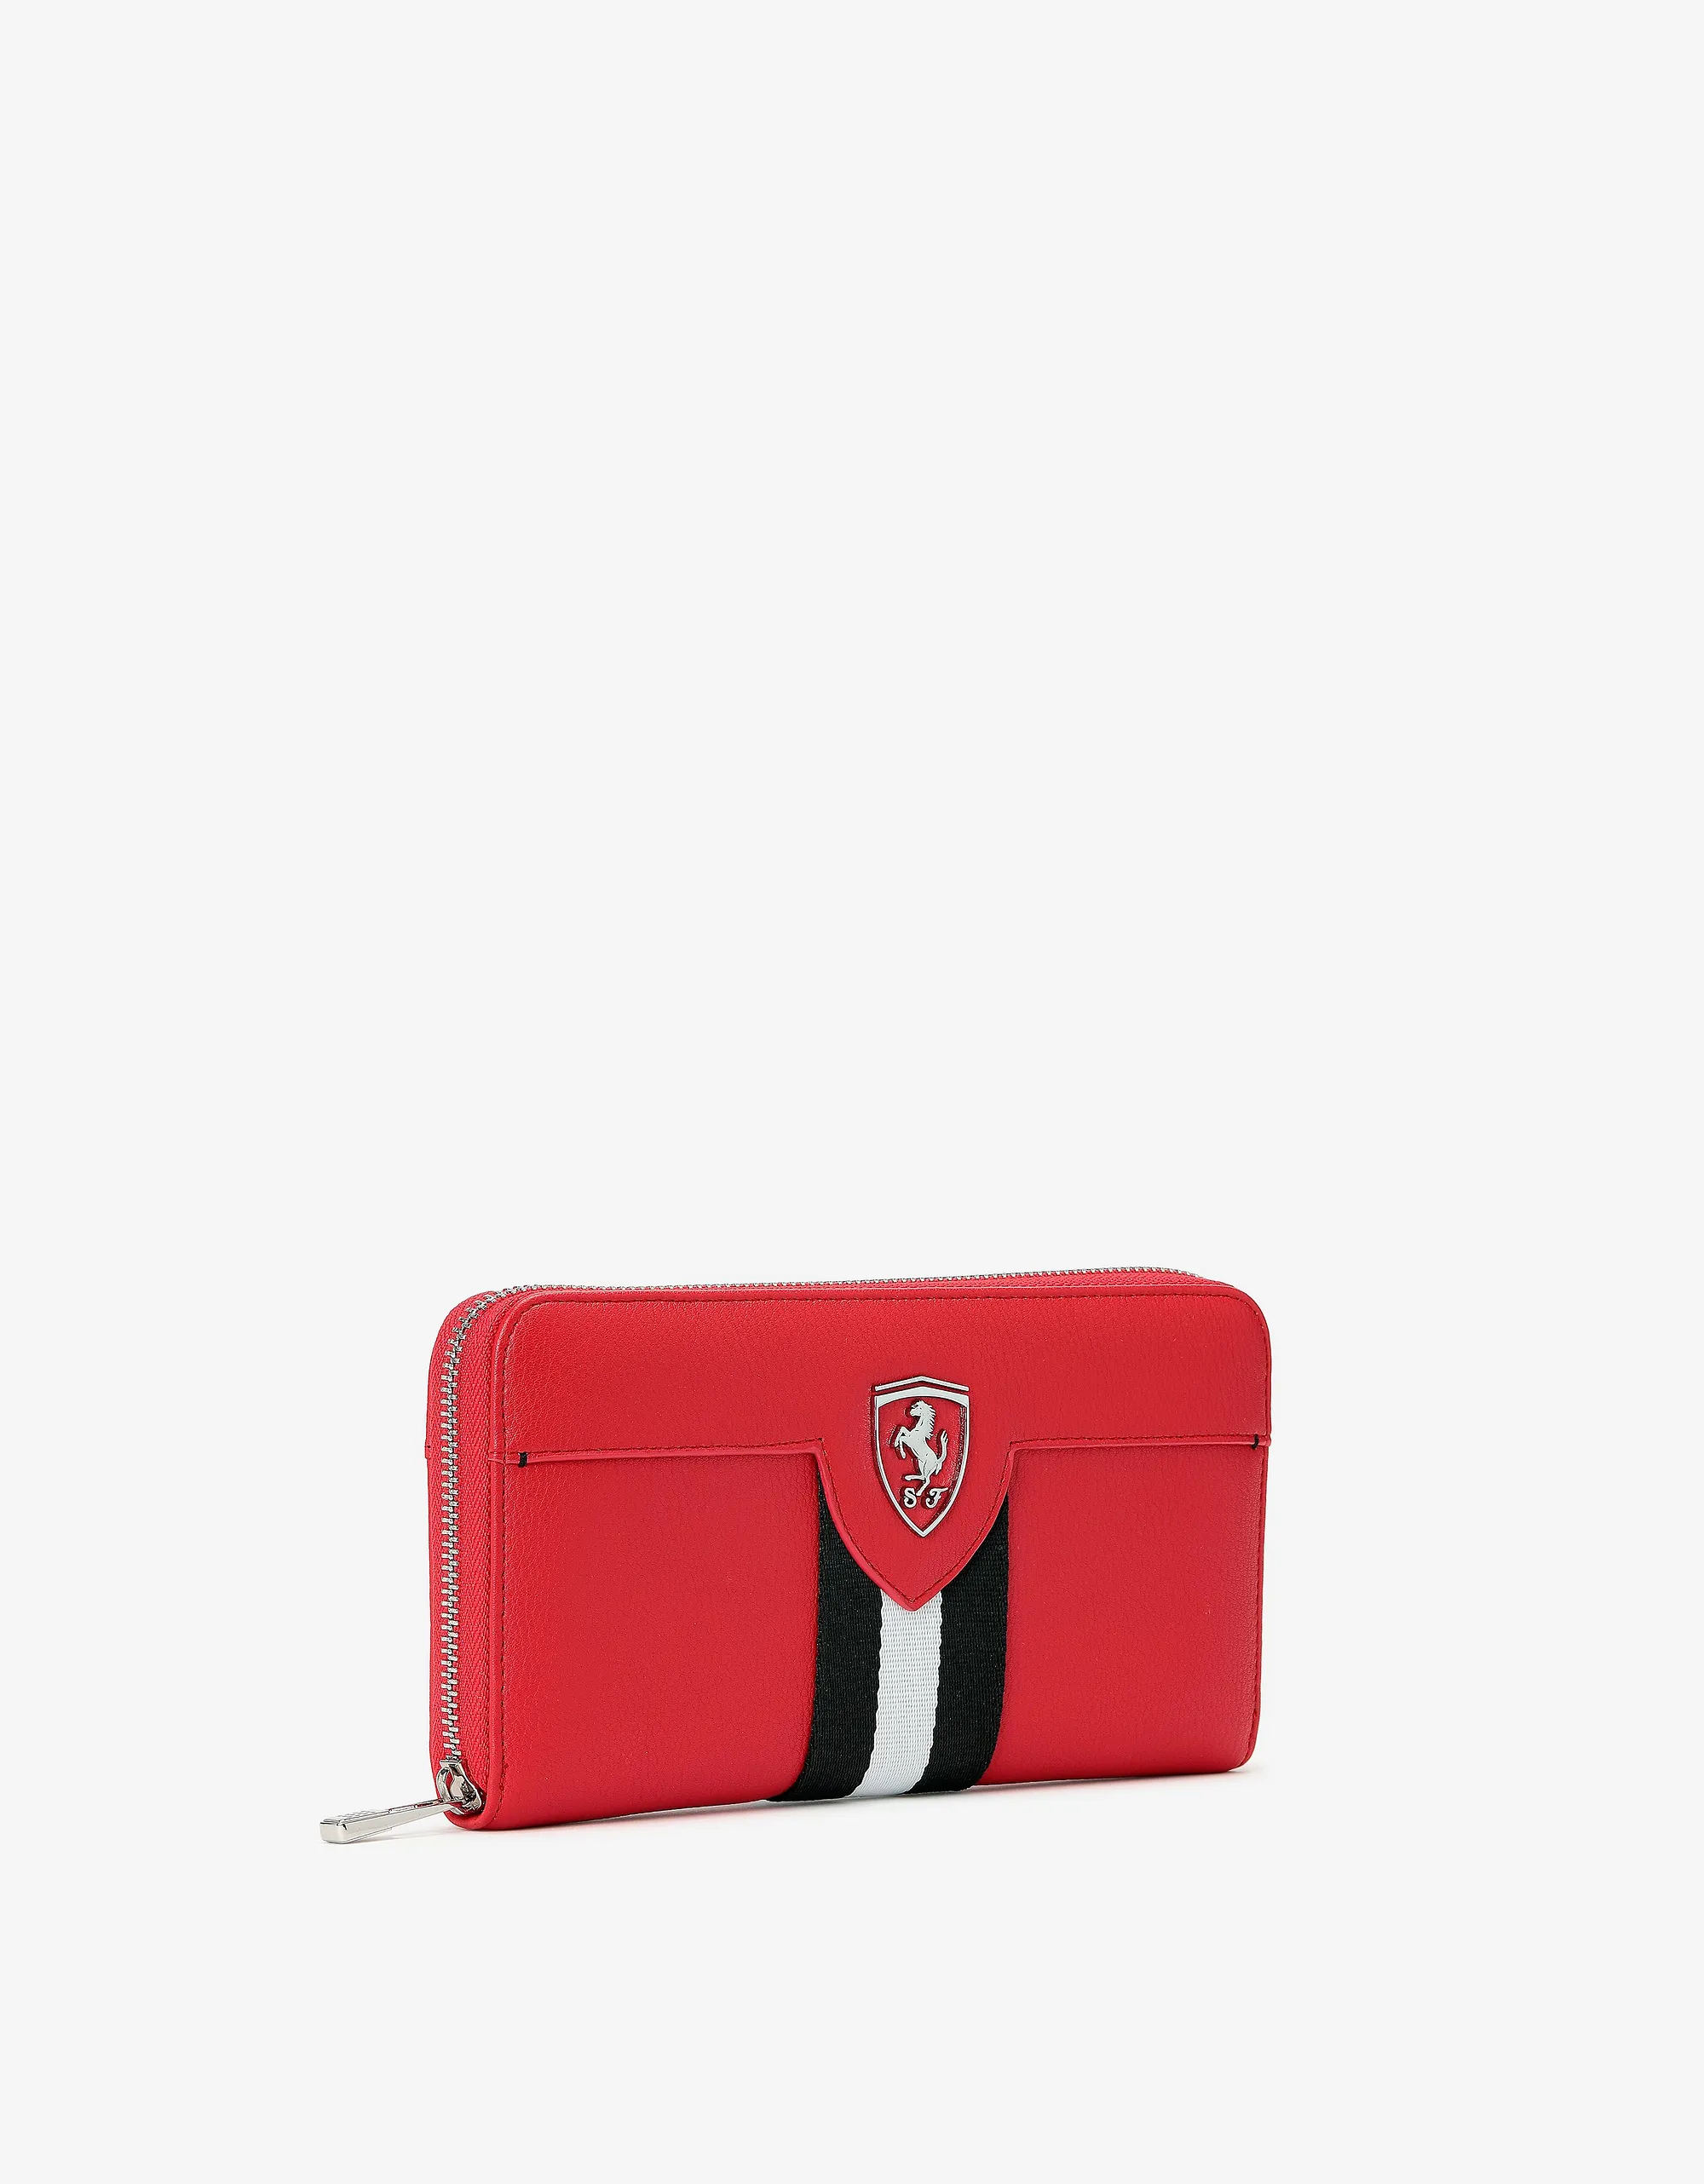 Ferrari Damen Brieftasche Geldbeutel Rot mit Ferrari Wappen